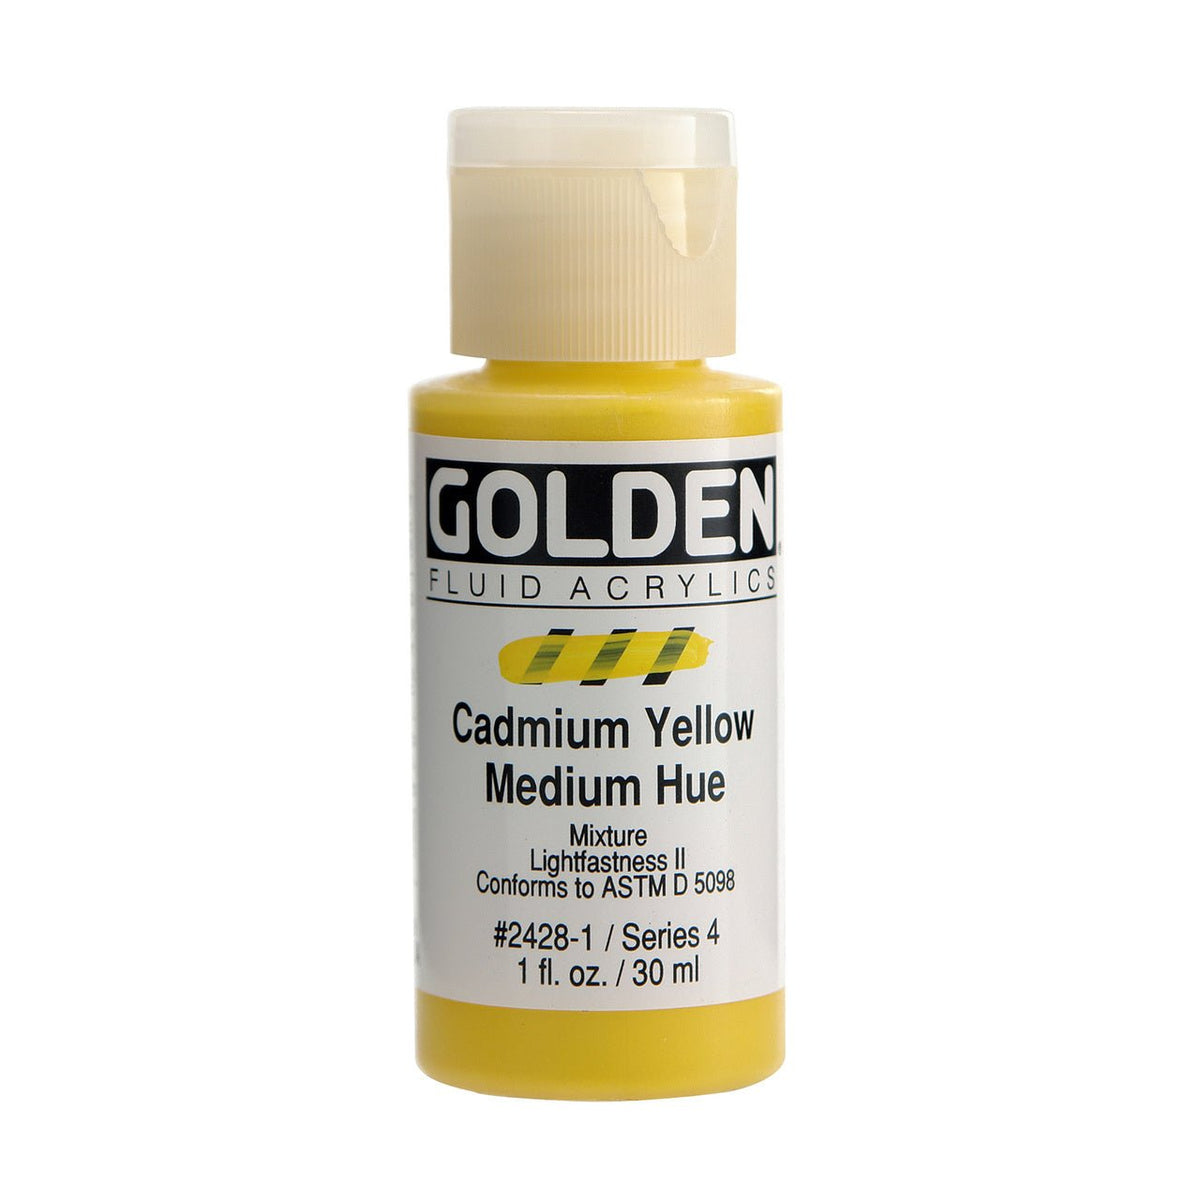 Golden Fluid Acrylic Cadmium Yellow Medium Hue 1 oz - merriartist.com